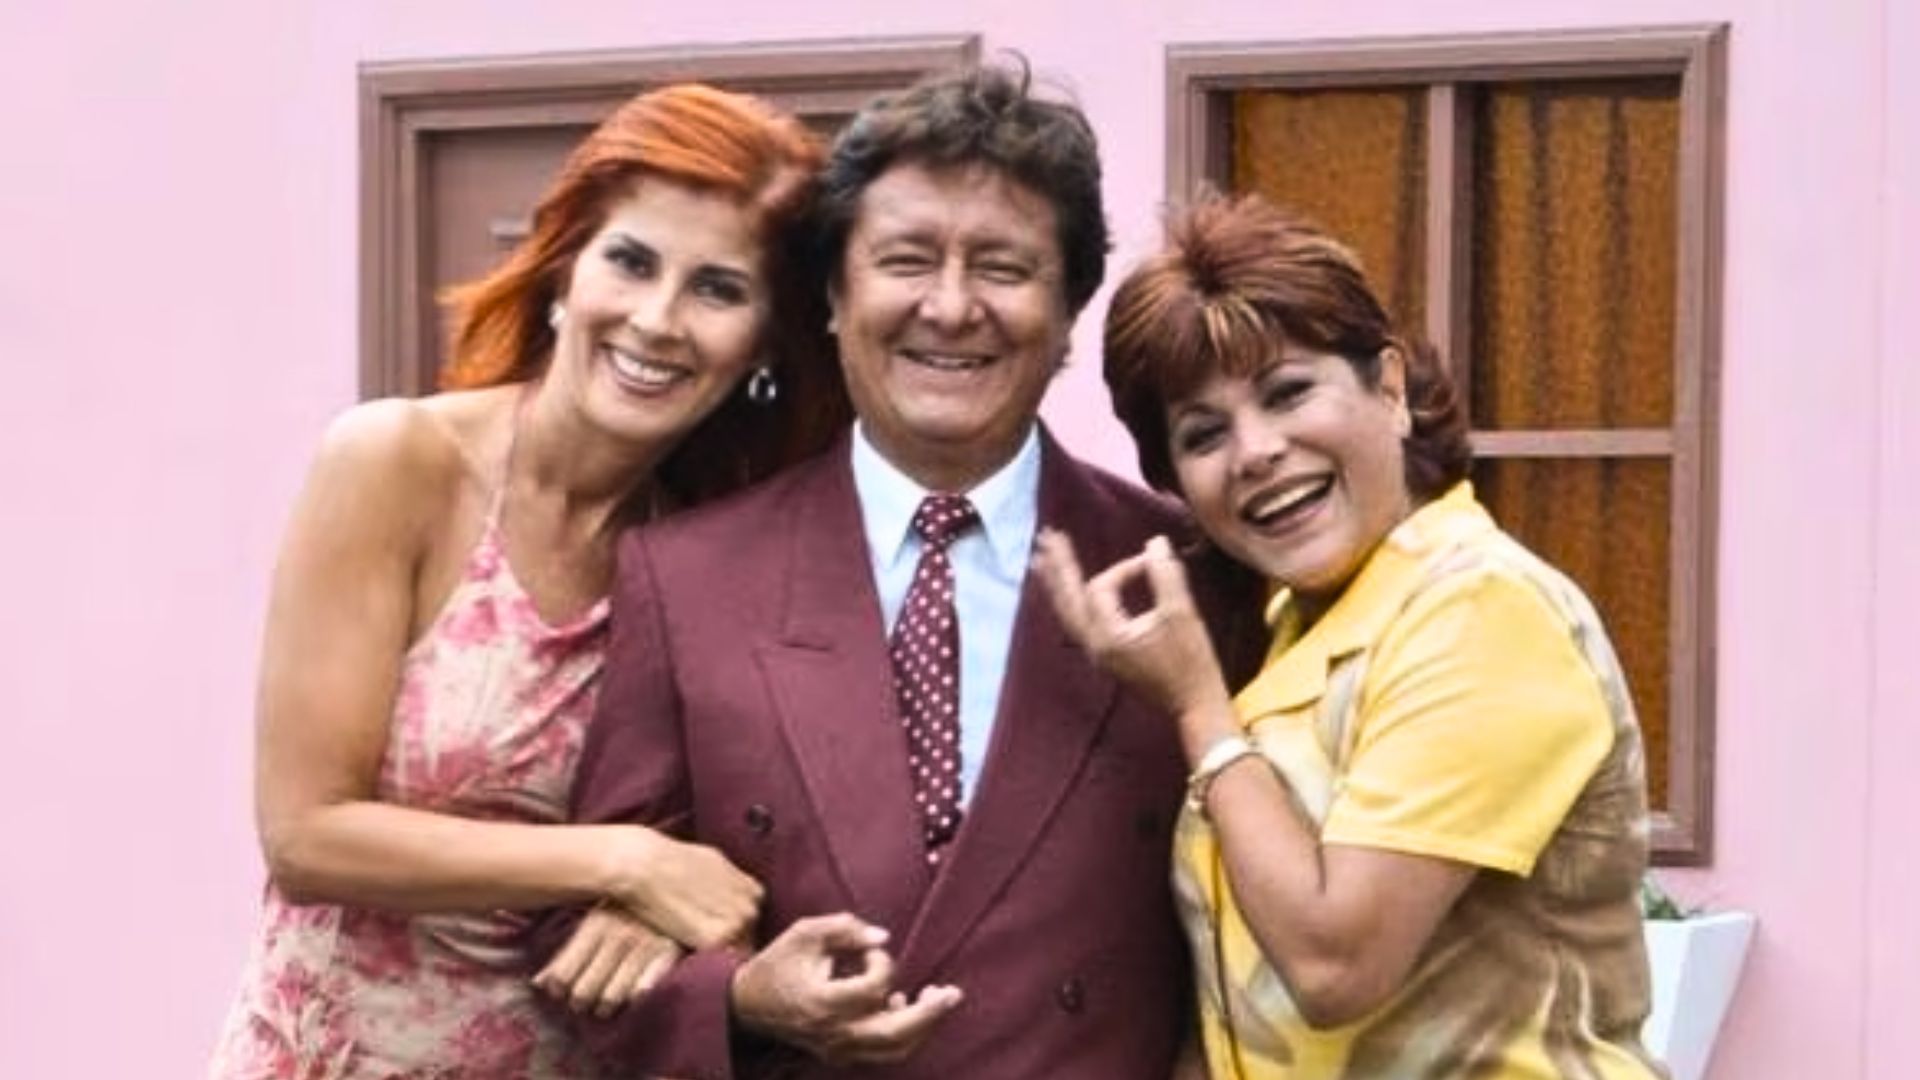 Adolfo Chuimán (Renato) with Aurora Aranda (Carmencita) and Olga Zumarán (Eva) in the recordings of "Mil Oficiones".